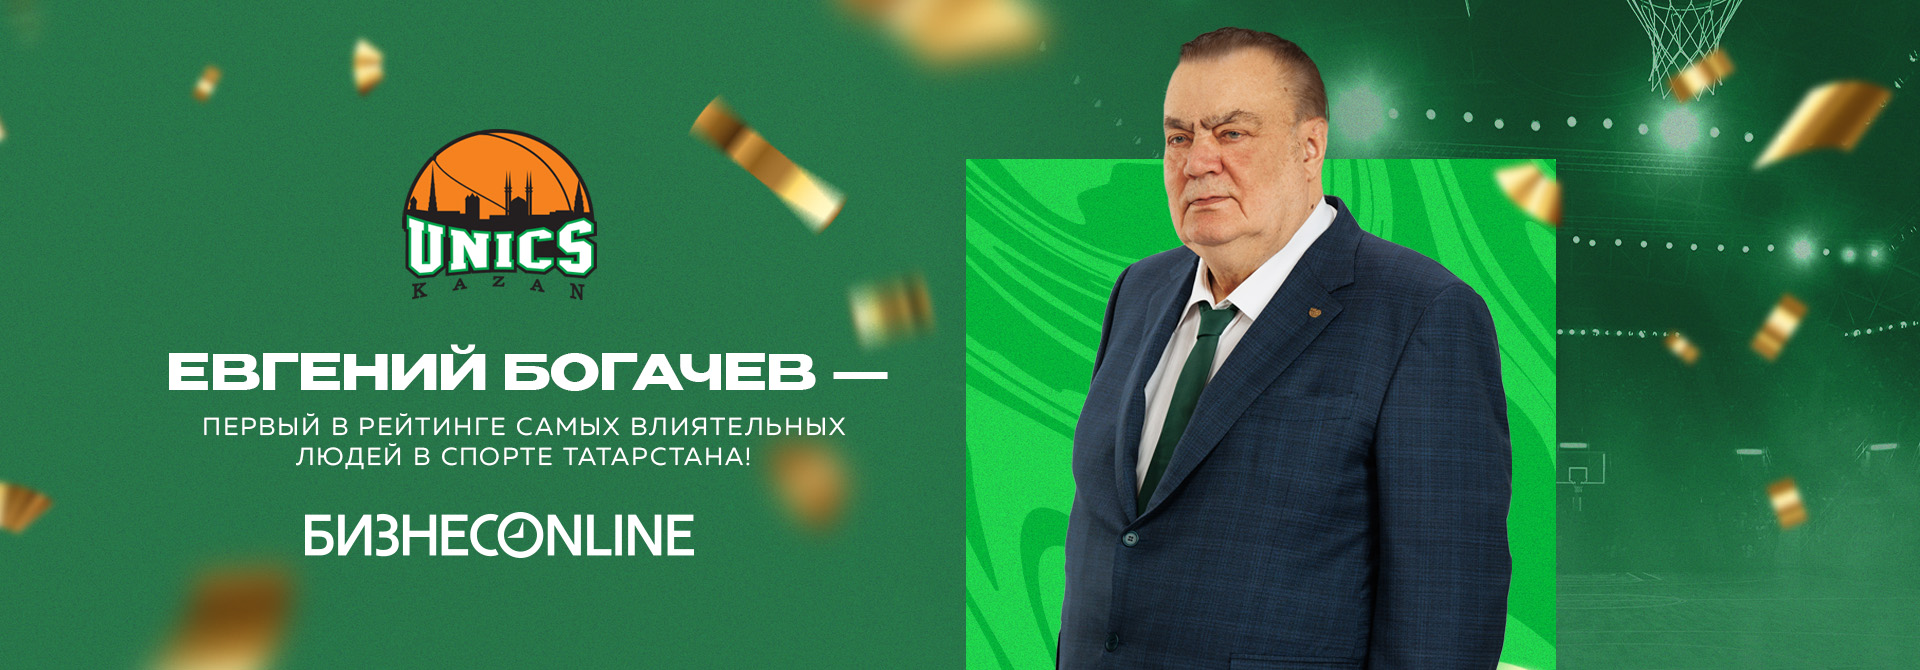 Евгений Богачев – персона года в спорте Татарстана 